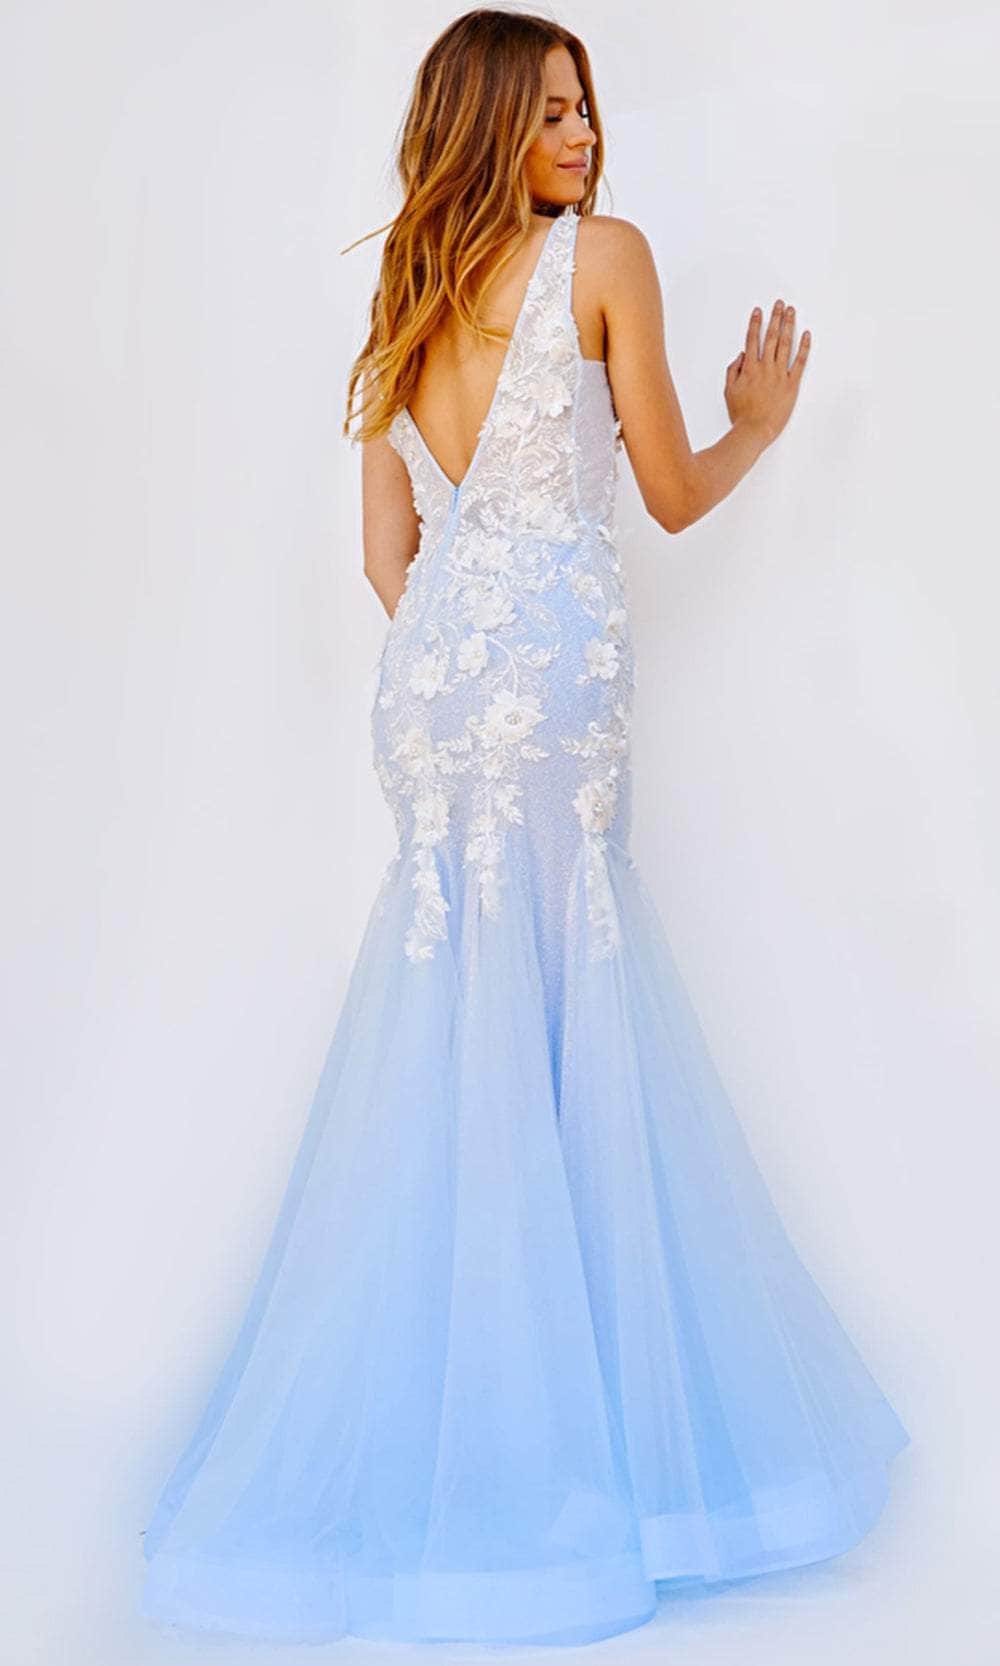 Jovani 09322 - Plunging Neck Floral Appliqued Ombre Gown Prom Dresses